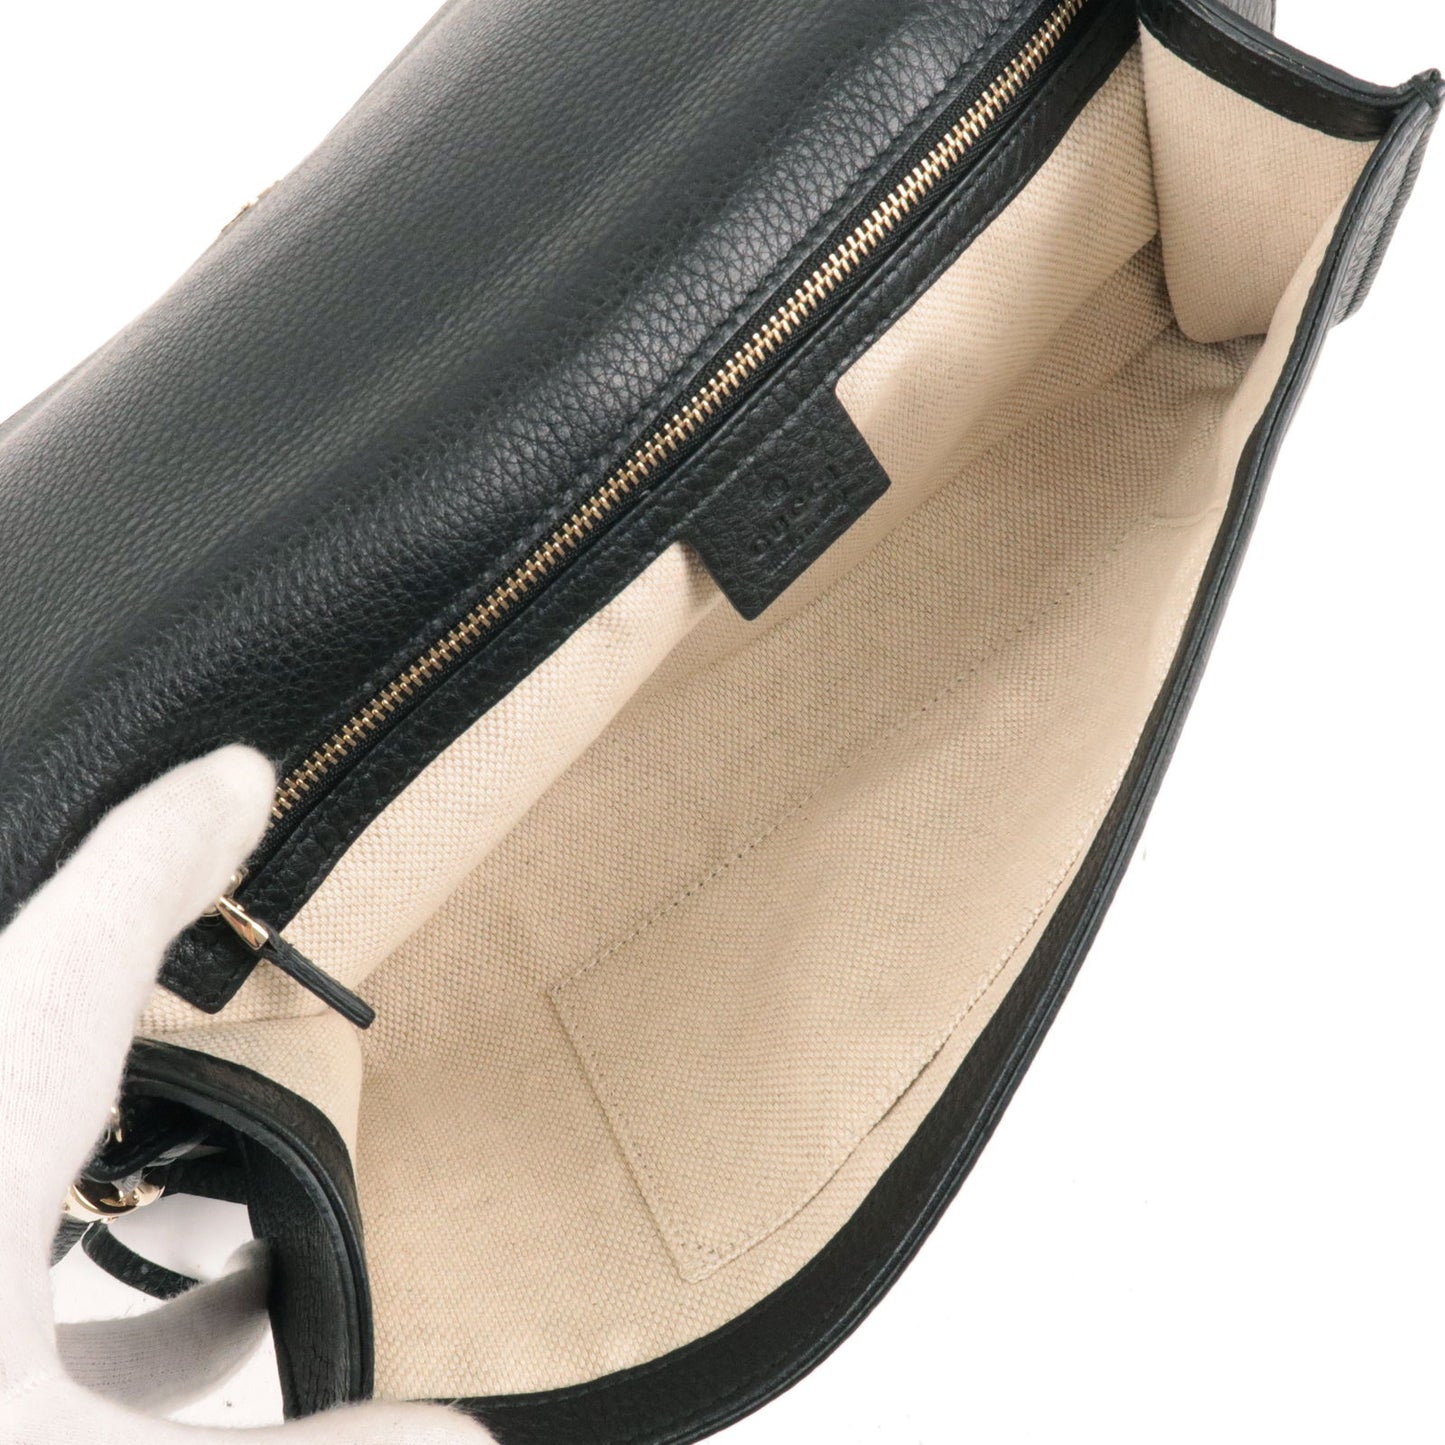 GUCCI SOHO Leather Clutch Bag Second Bag Black 336753